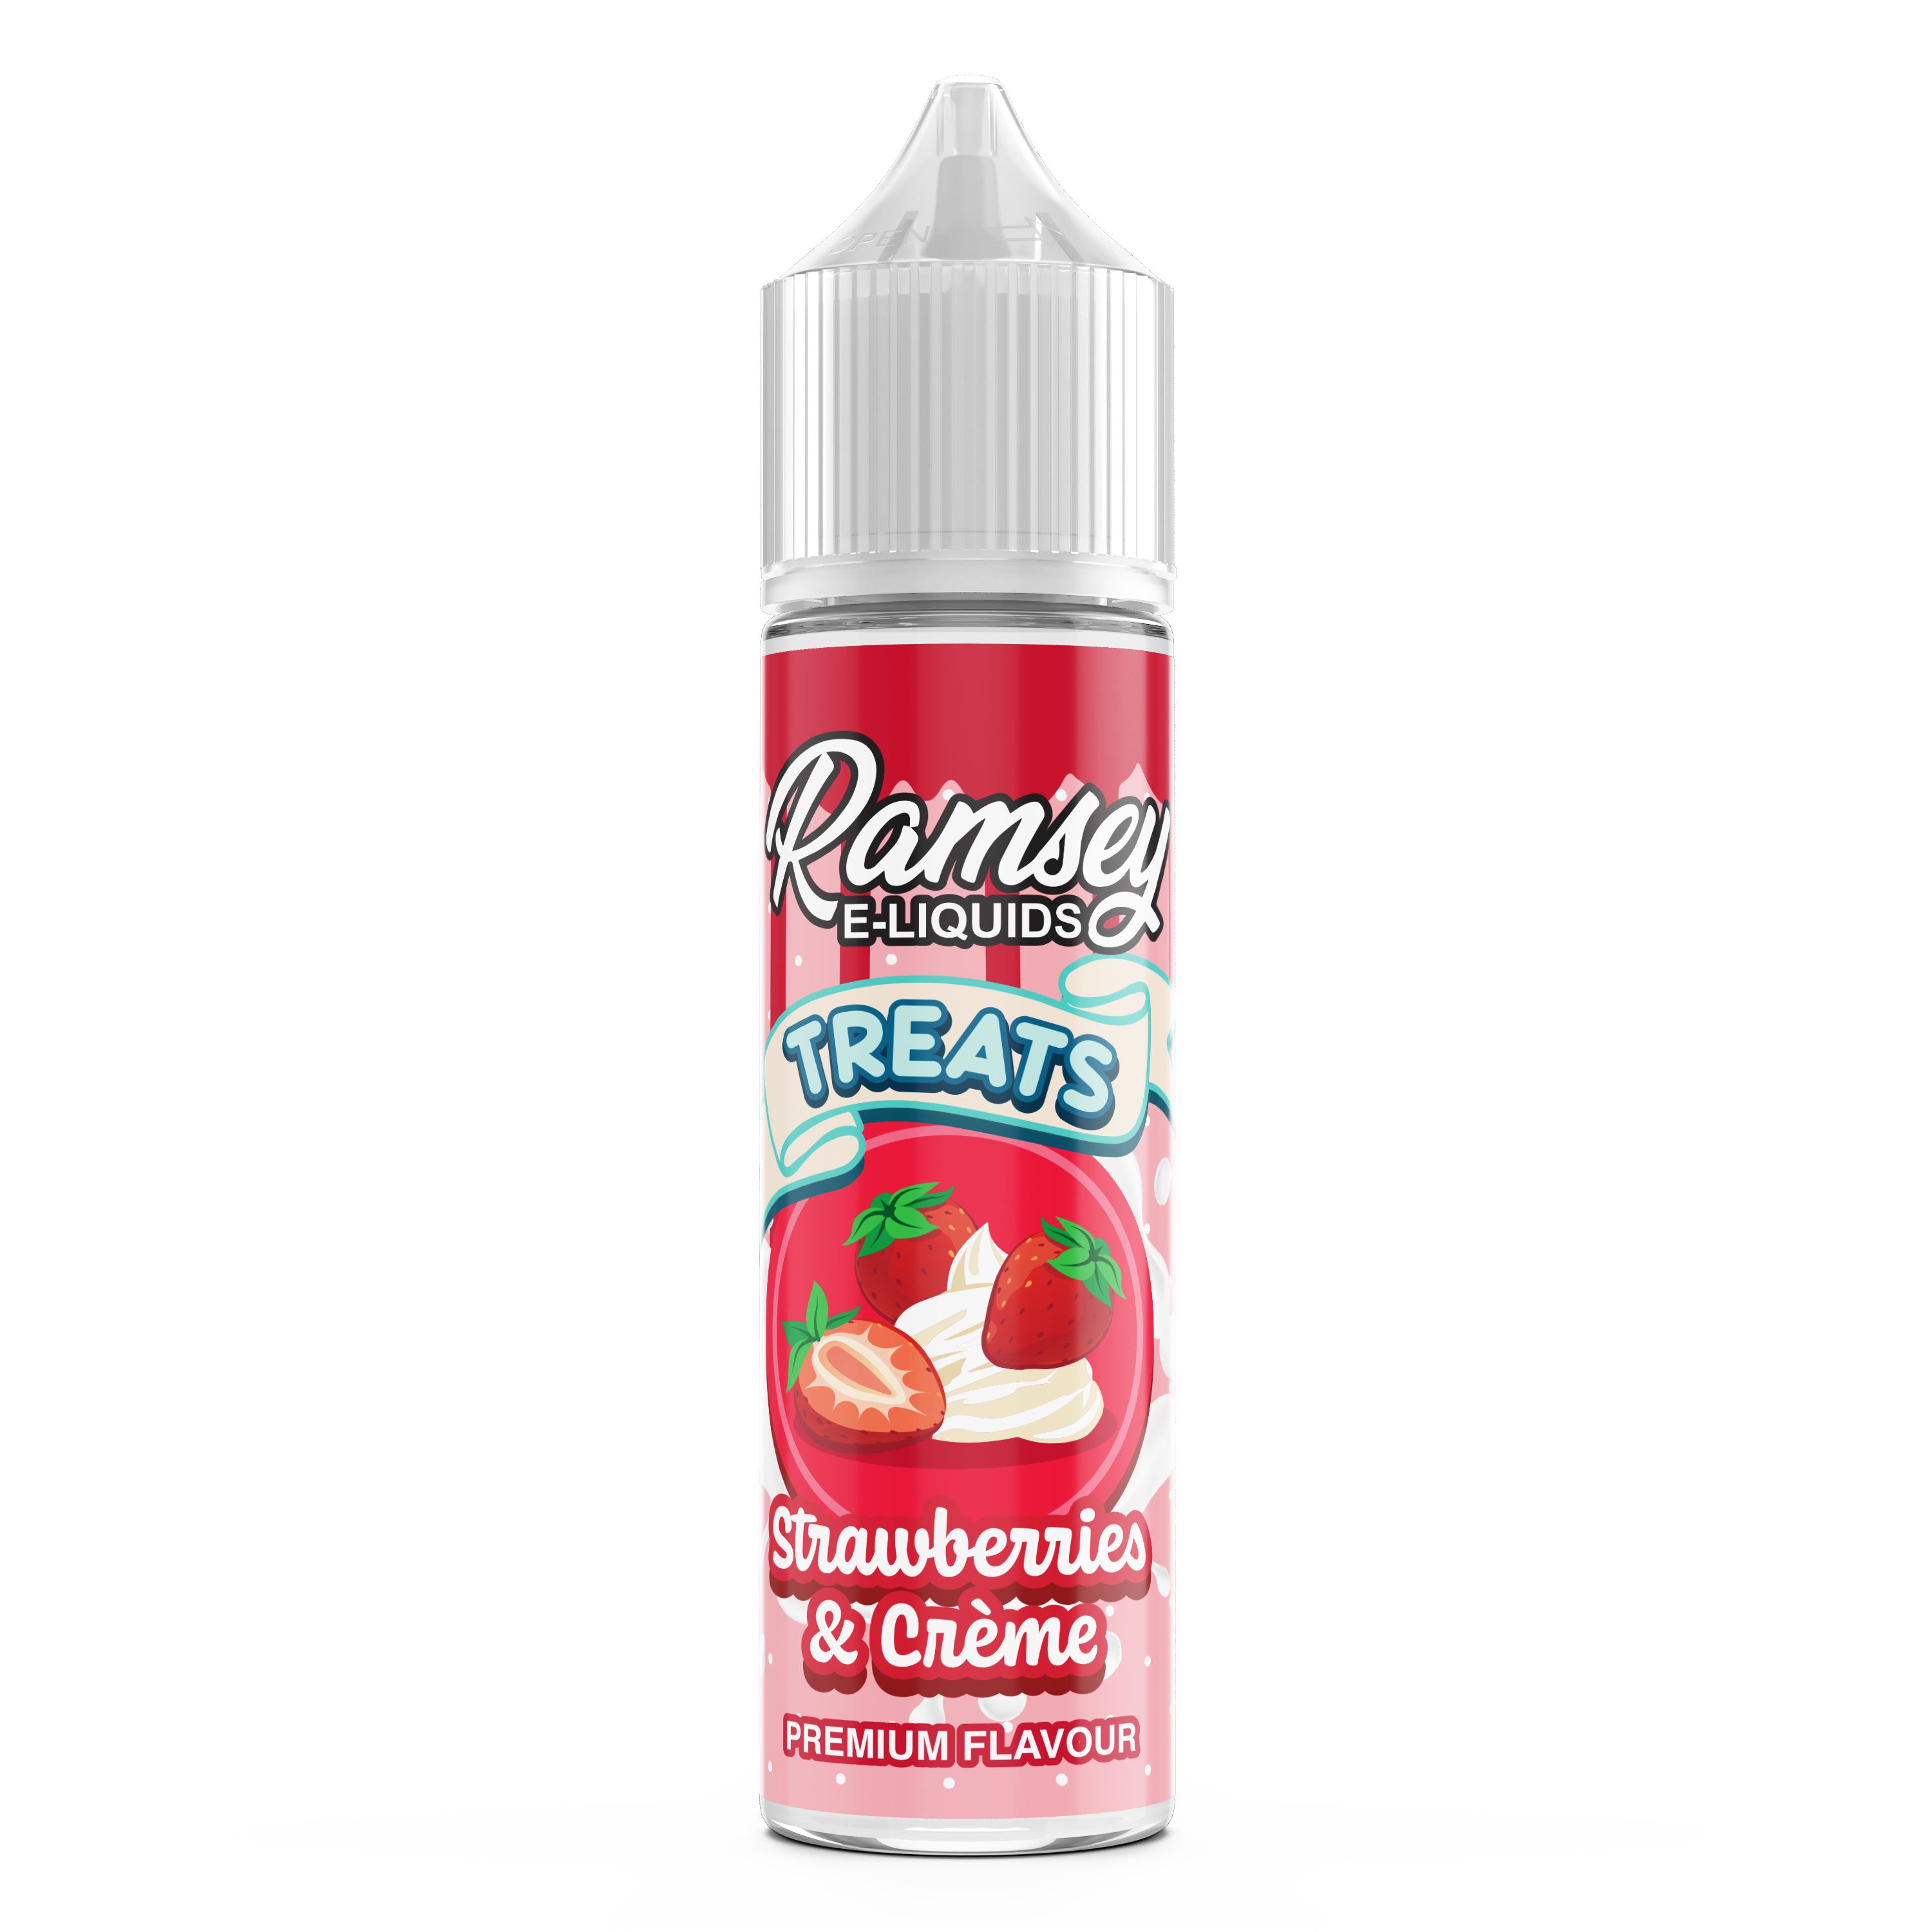 Ramsey E-Liquids Treats Strawberries Cream 0mg 50ml Shortfill E-Liquid